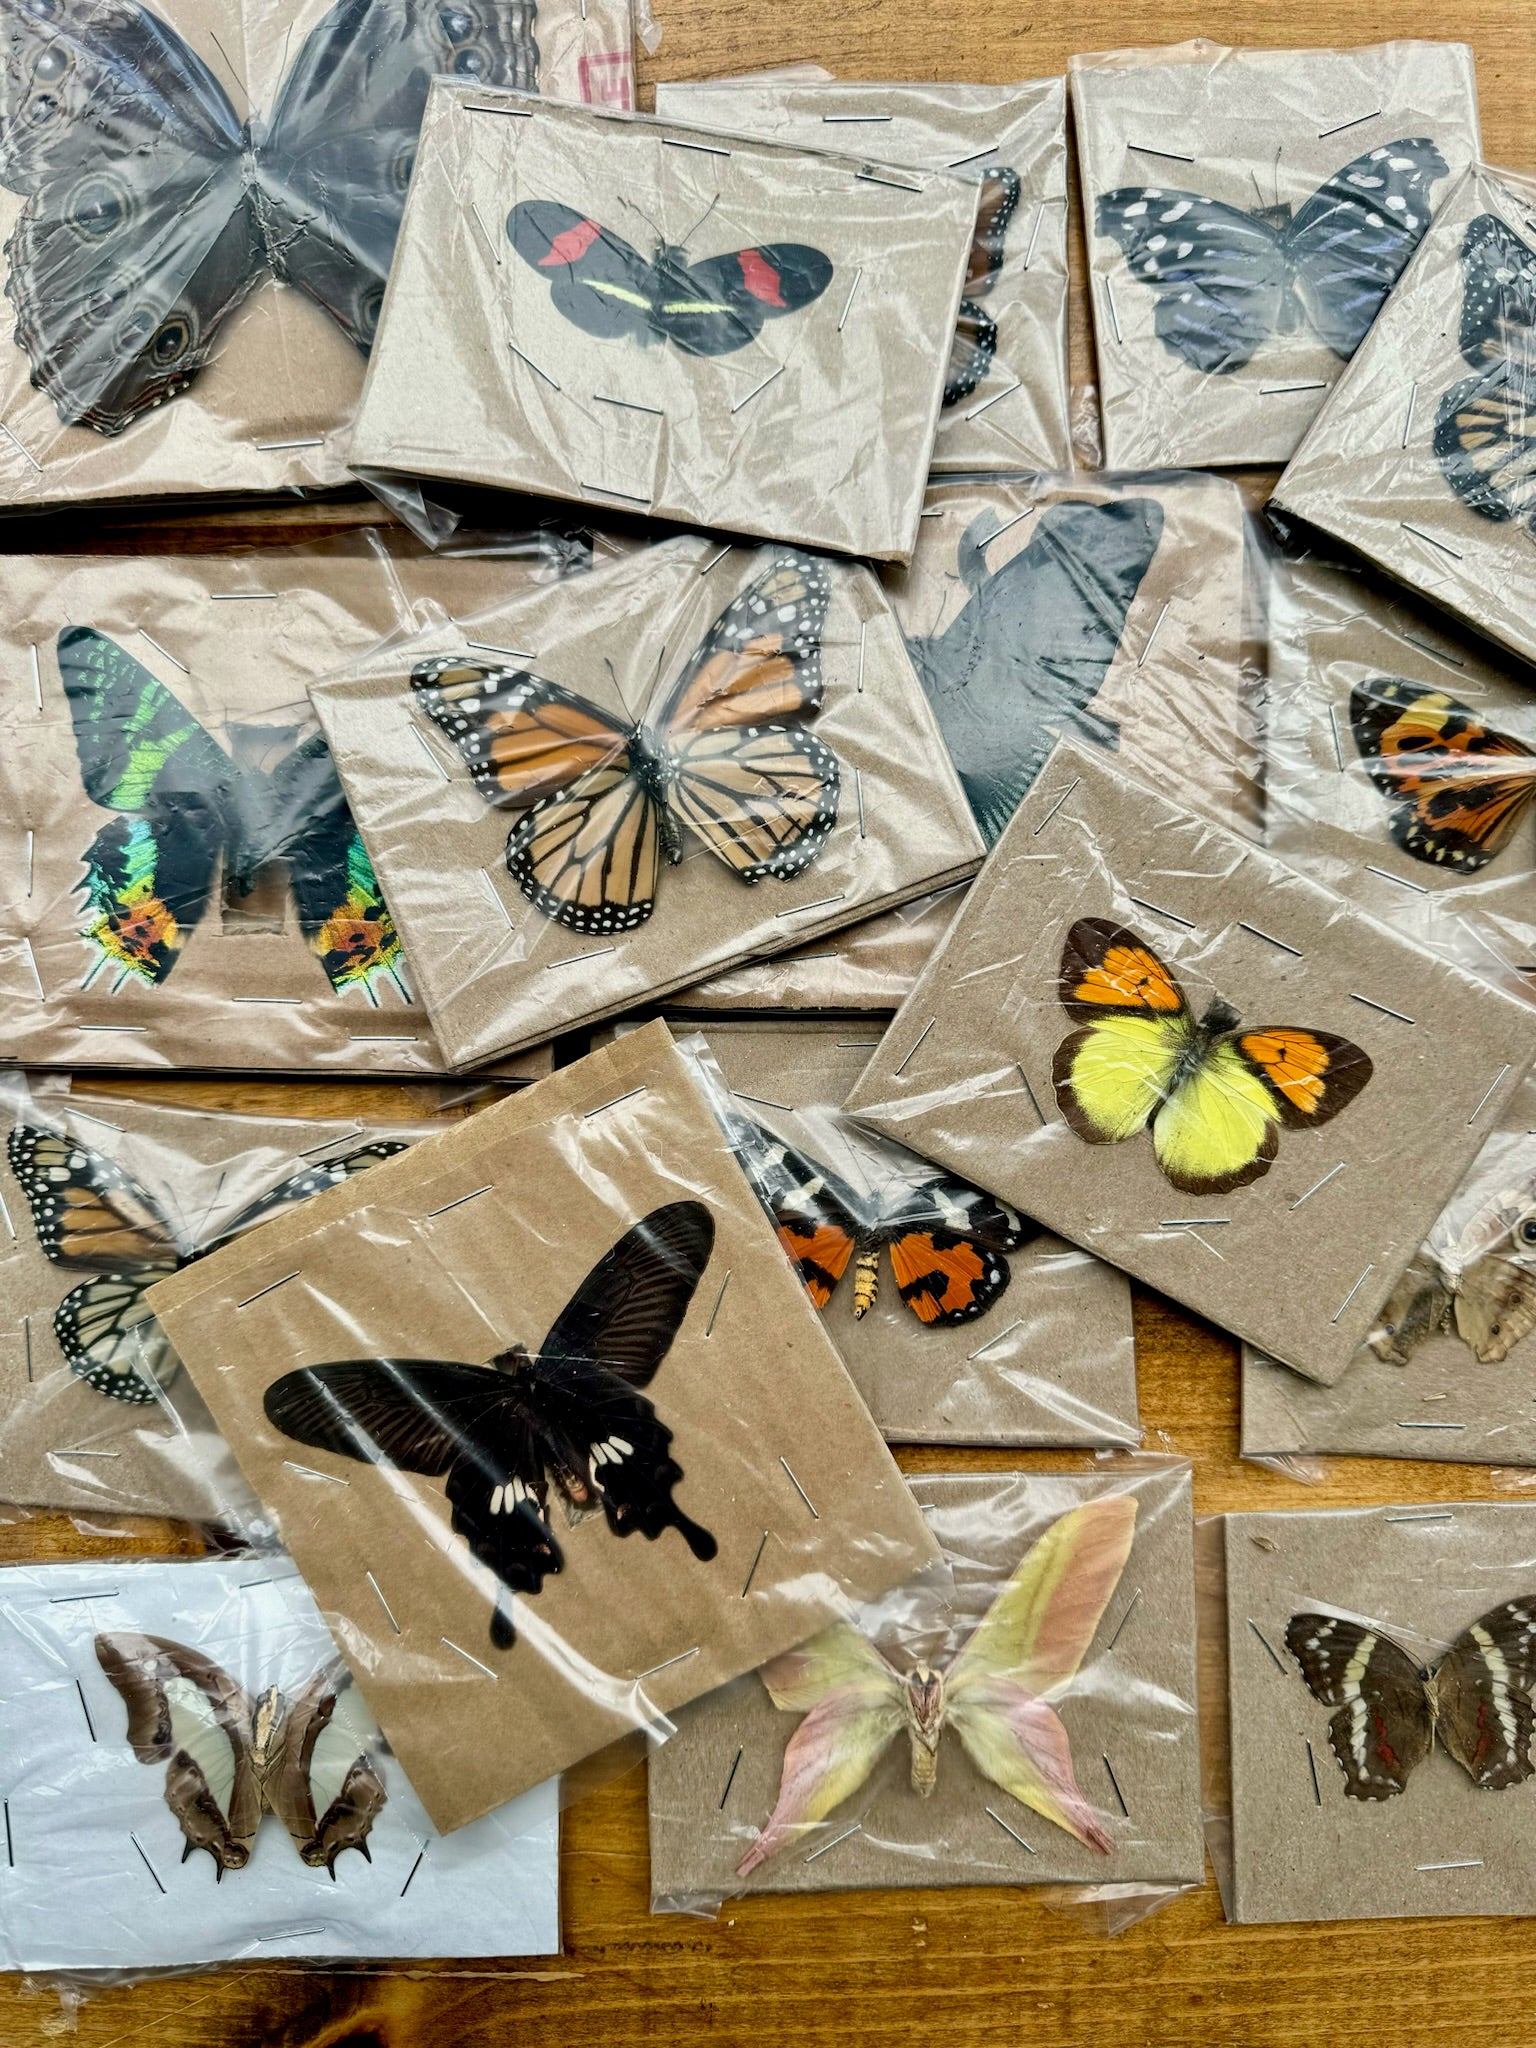 REAL Butterflies and Moths WINGS SPREAD open, Mixed Random Assortment